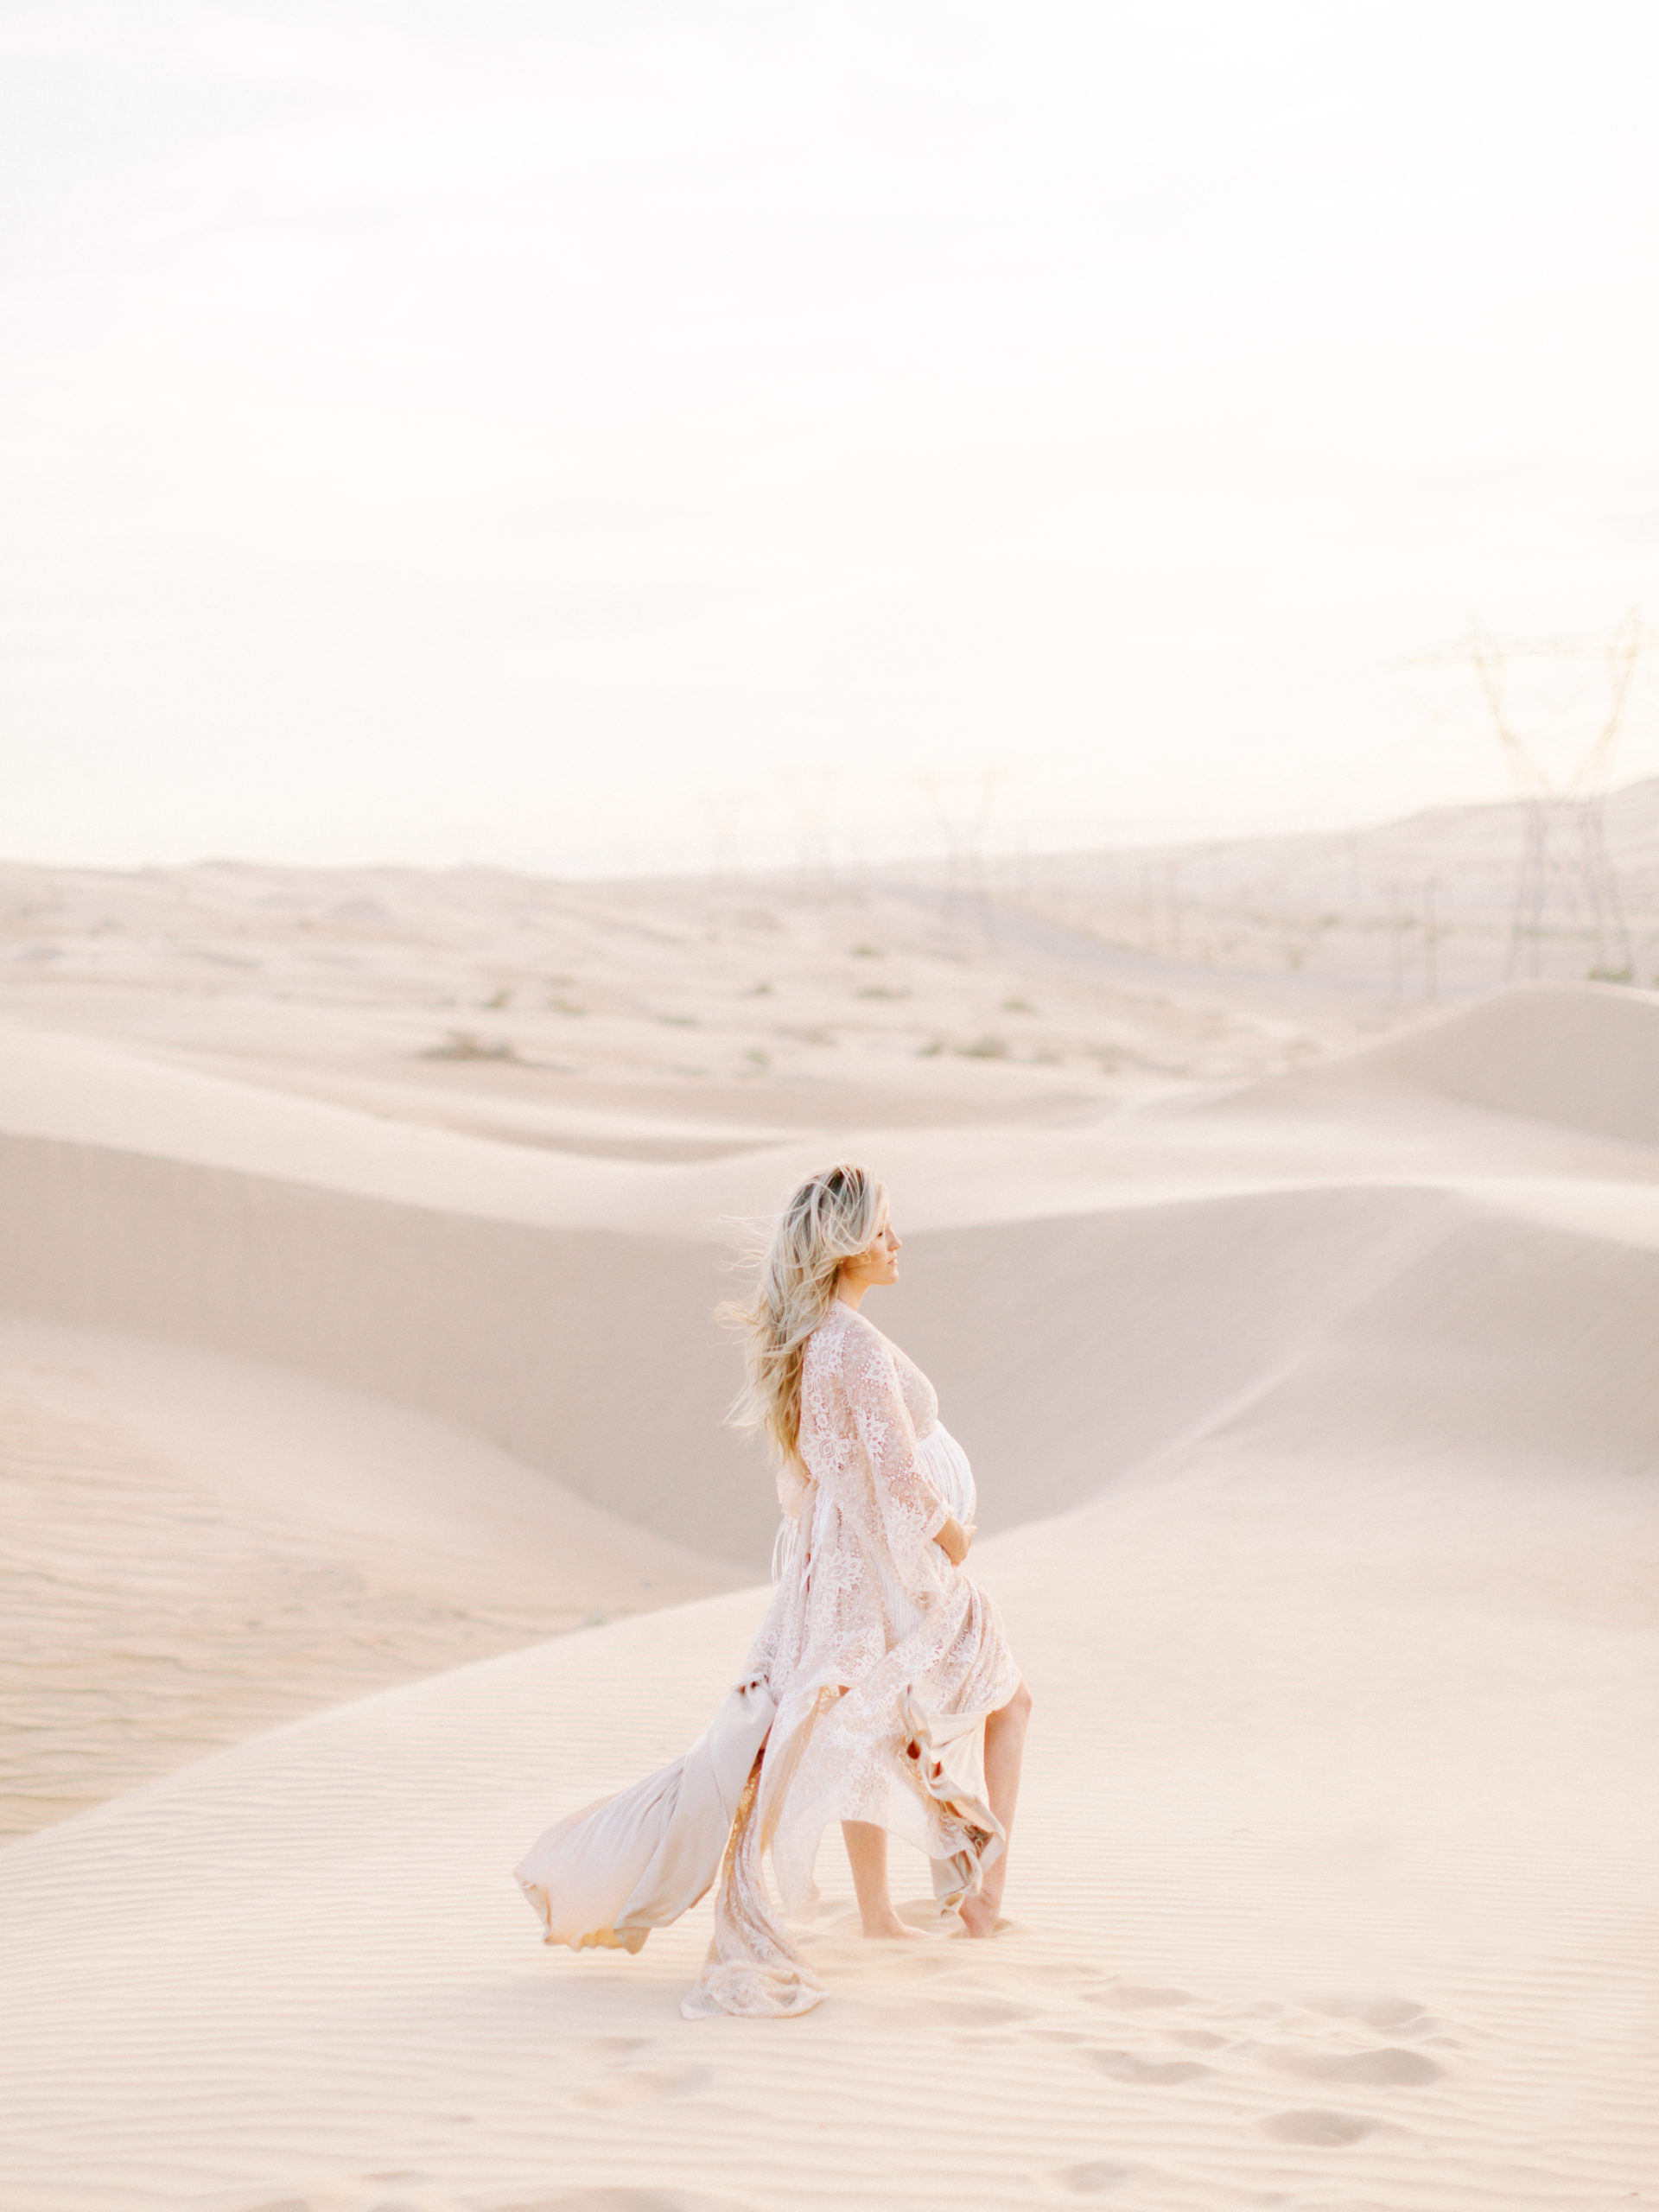 yuma-maternity-photographer-maternity-portrait-on-imperial-dunes